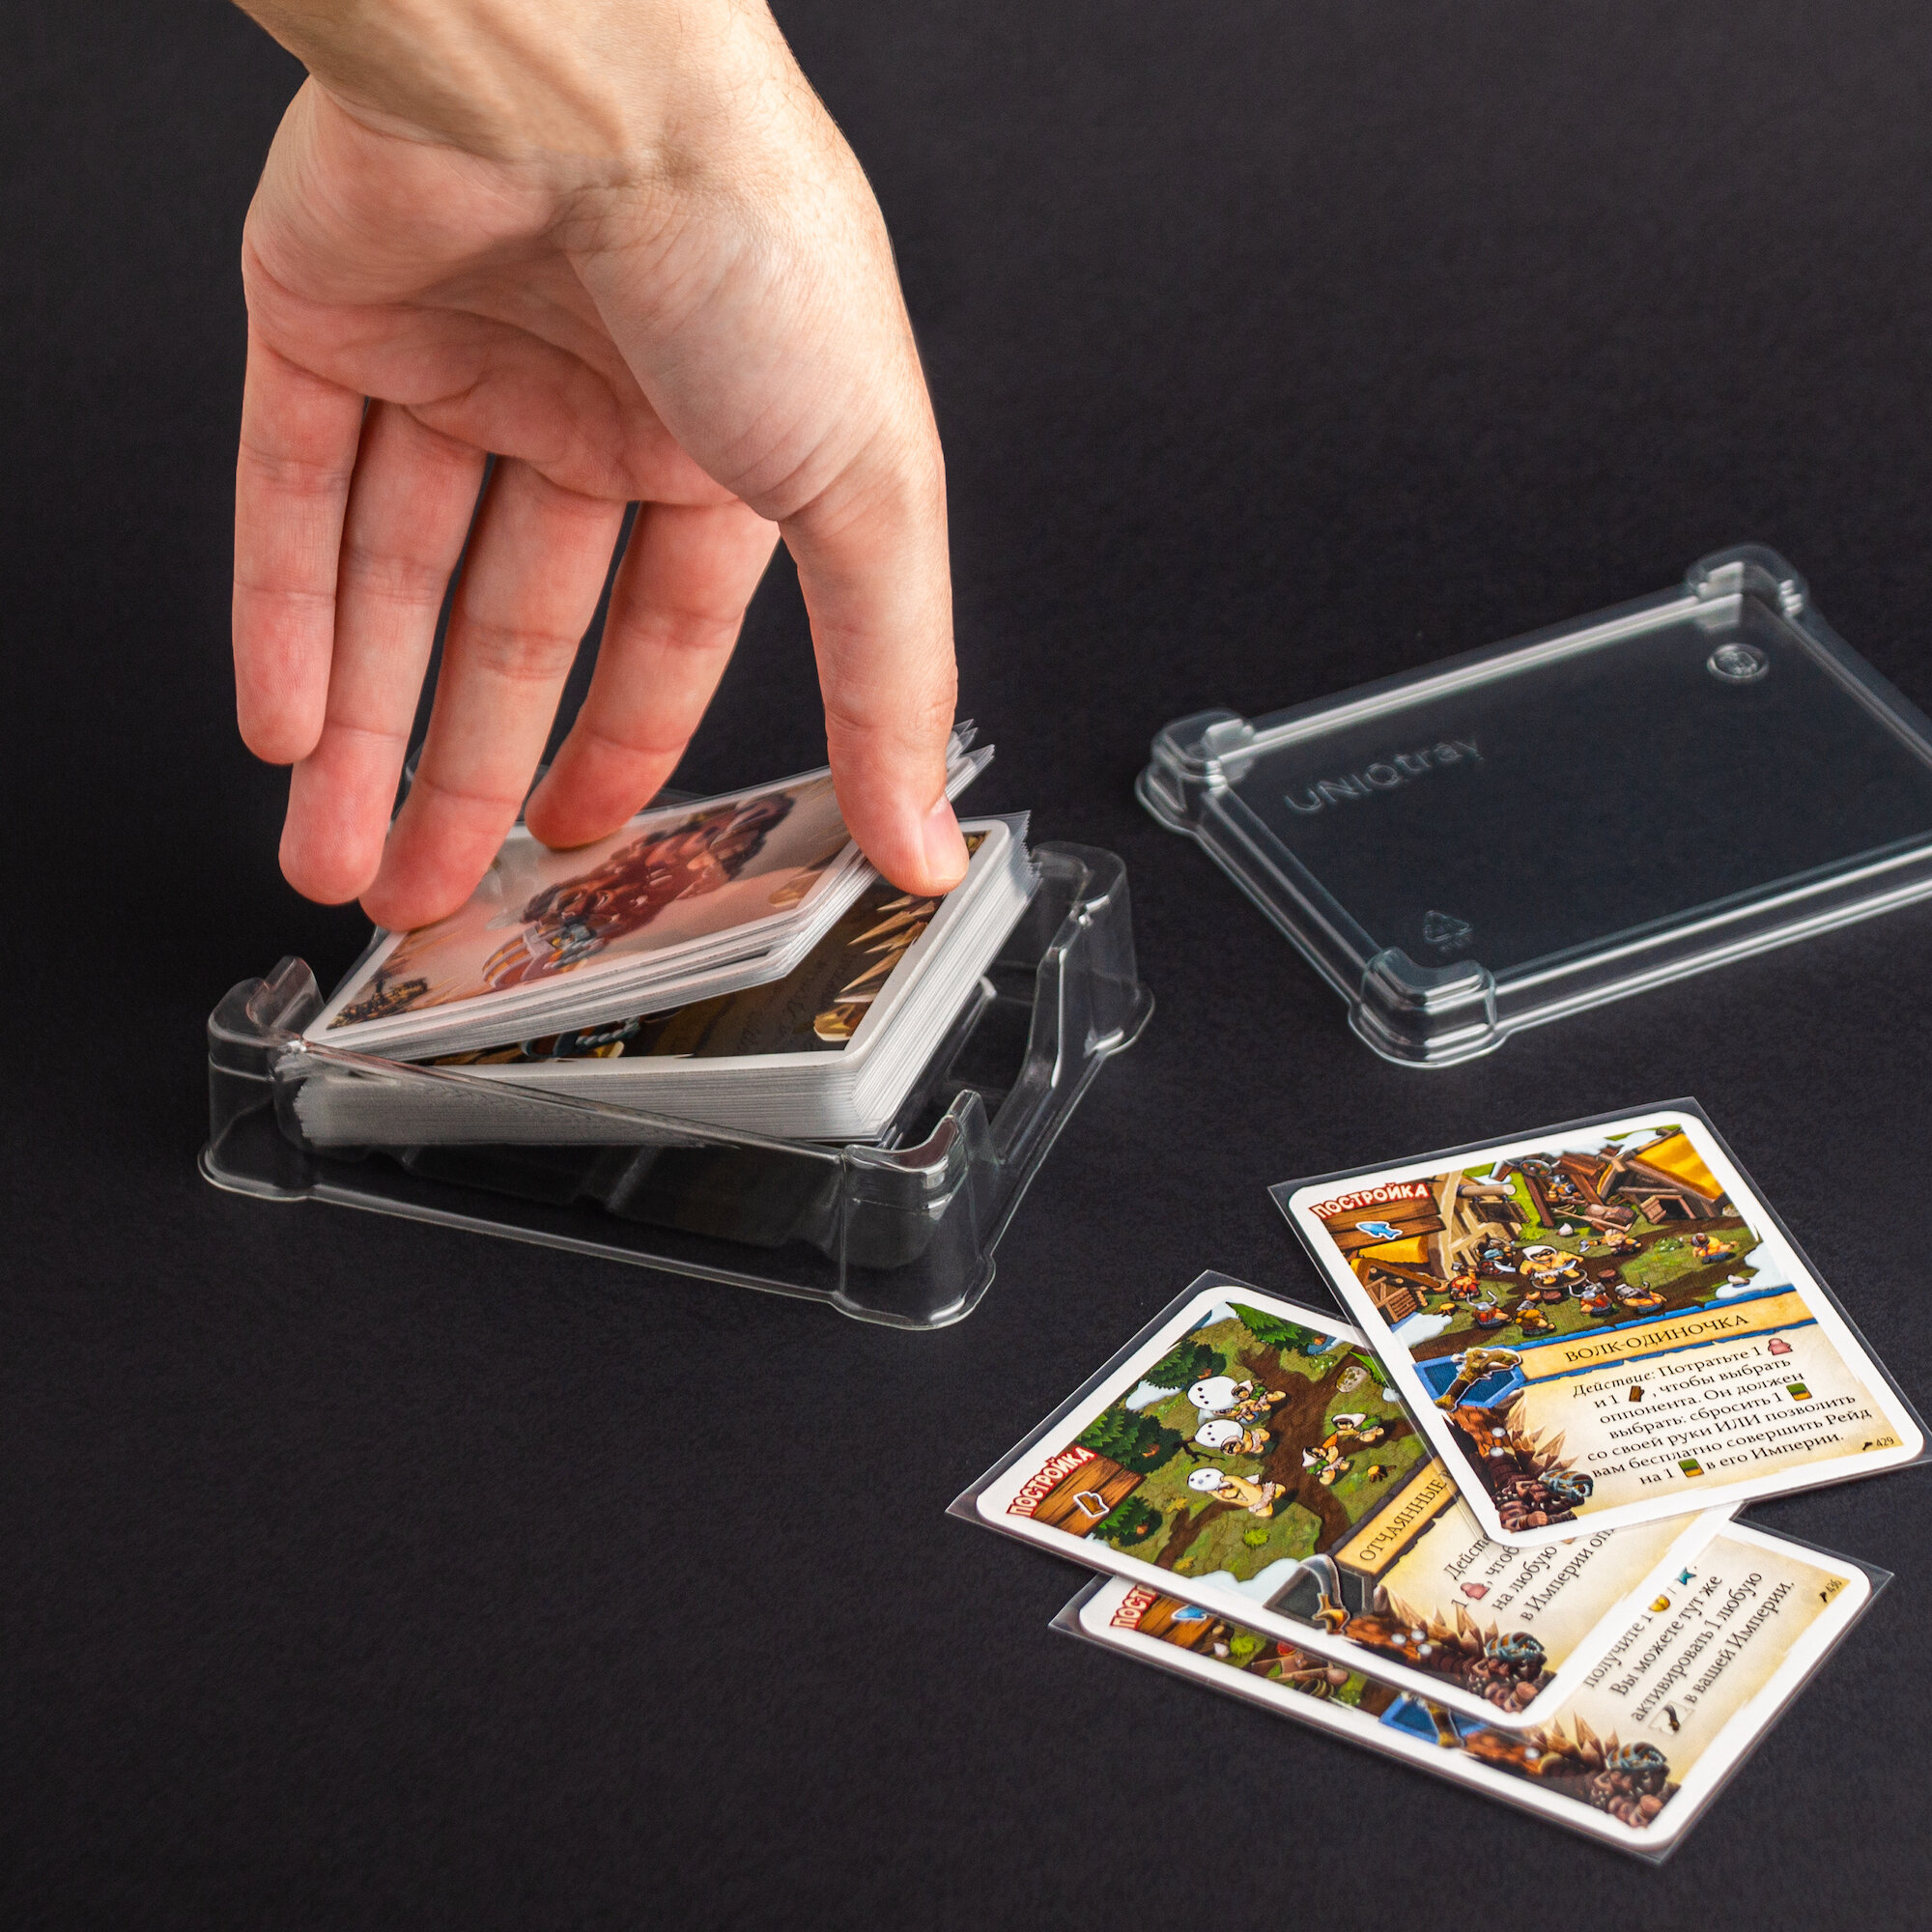 Meeple House UTS Card 40+ (40 карт) набор из 5-ти органайзеров для игровых карт 64х89мм, покерного формата, MTG